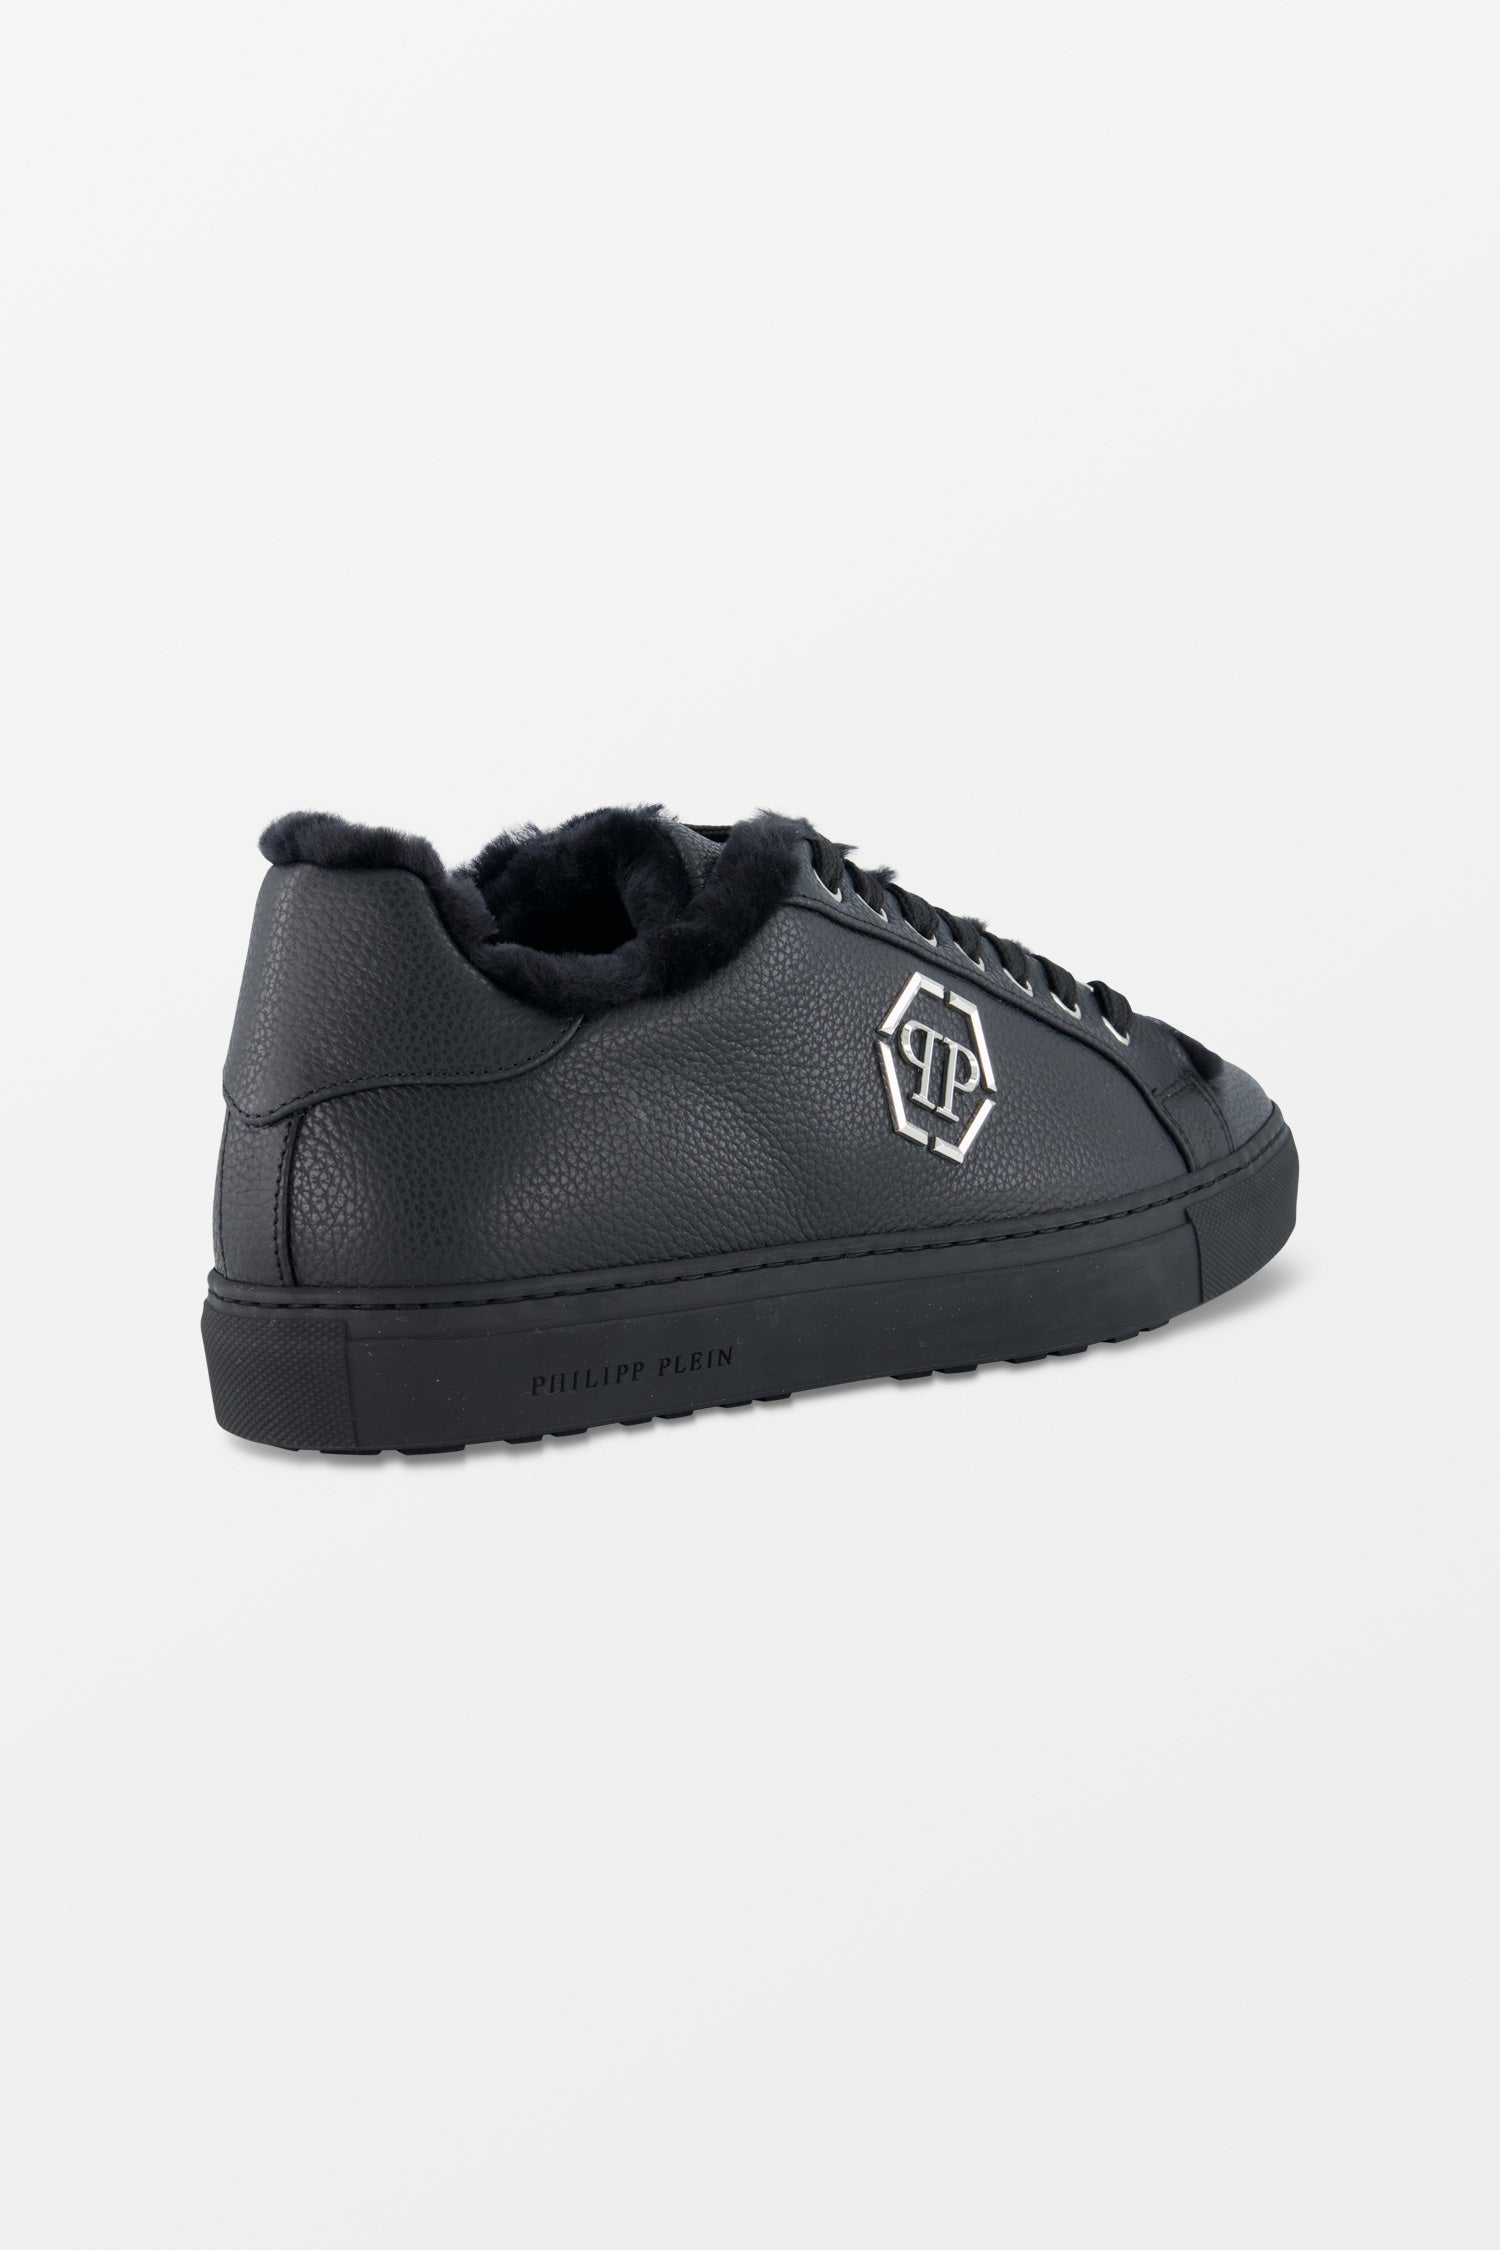 Philipp Plein Hexagon Black Sneakers